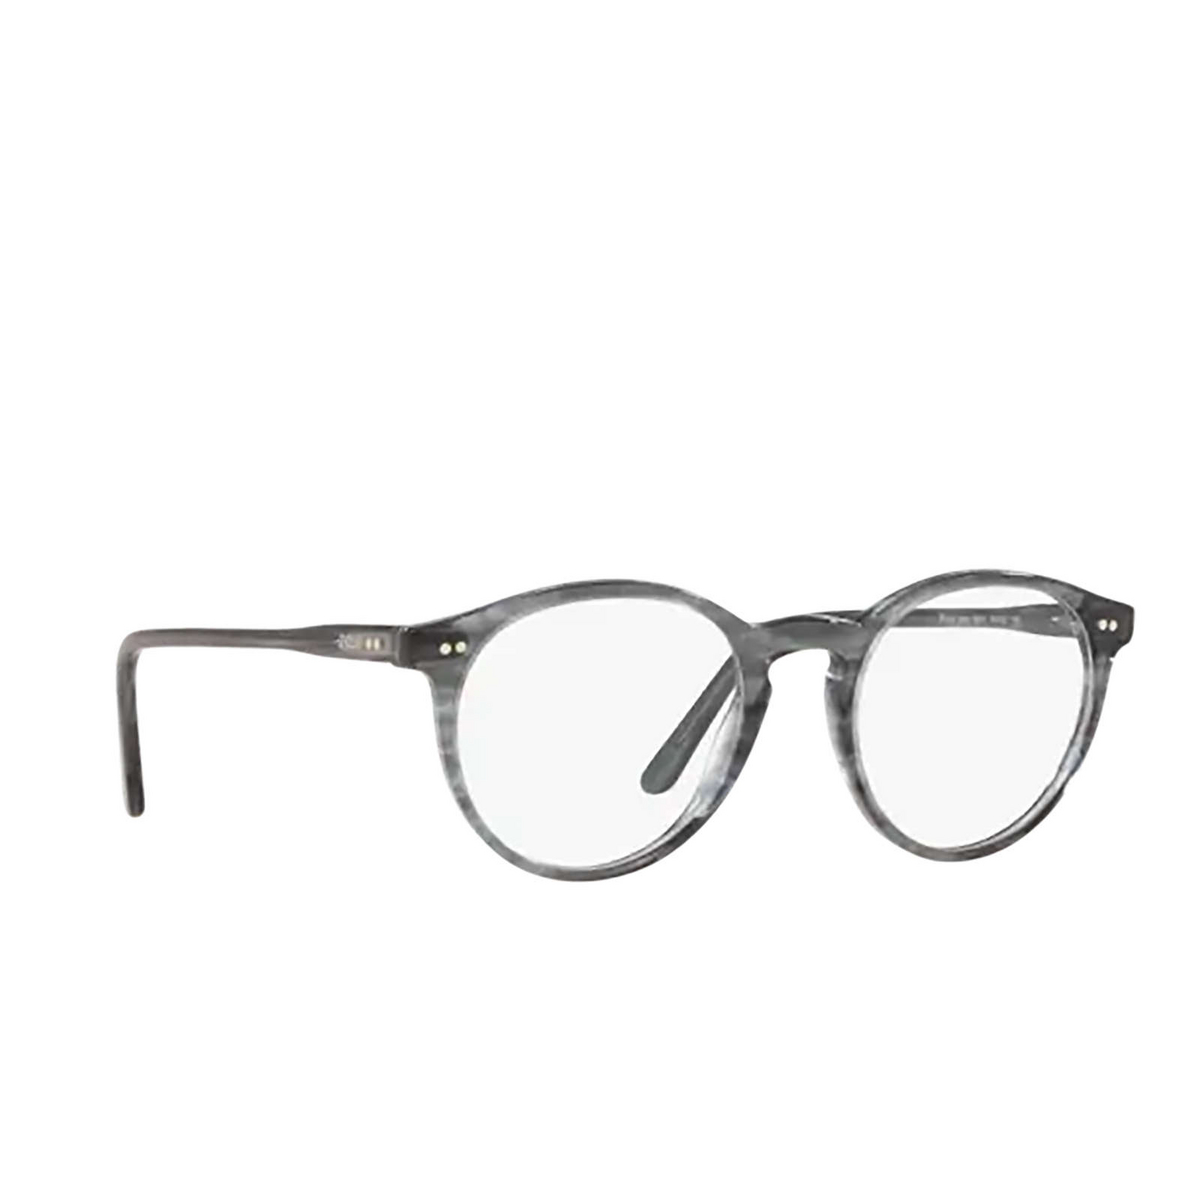 Polo Ralph Lauren® Round Eyeglasses: PH2083 color Shiny Striped Grey 5821 - three-quarters view.